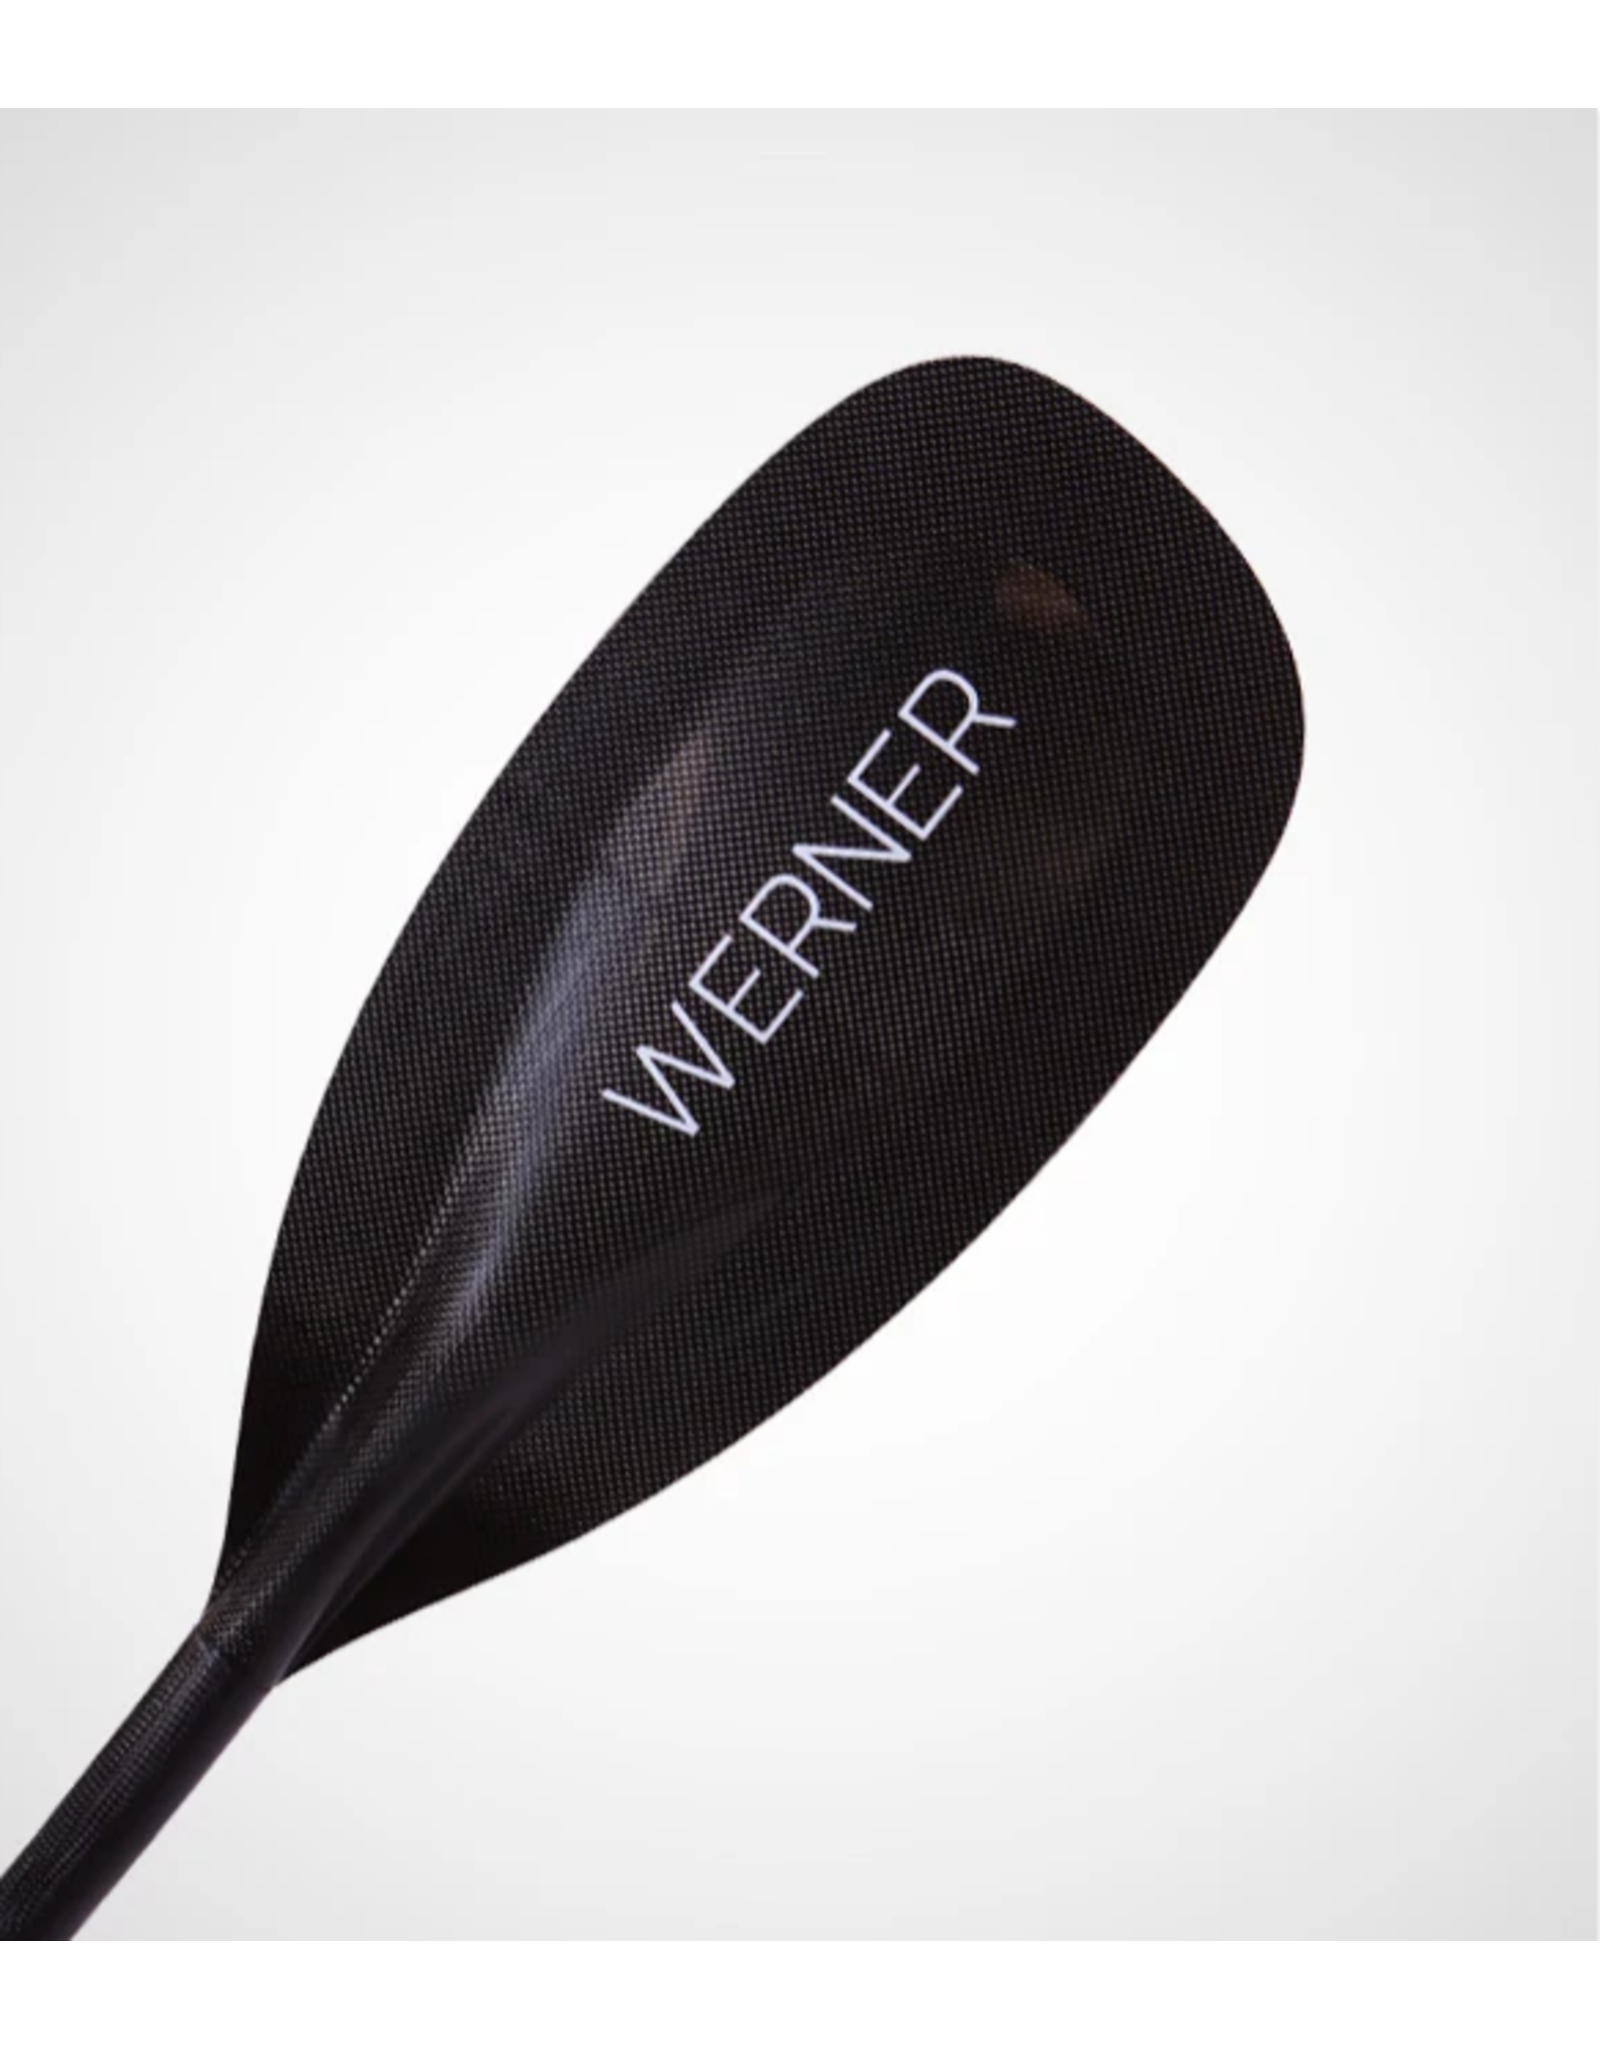 Werner Werner Pagaie Stealth 1pc Straight Shaft R30 200cm